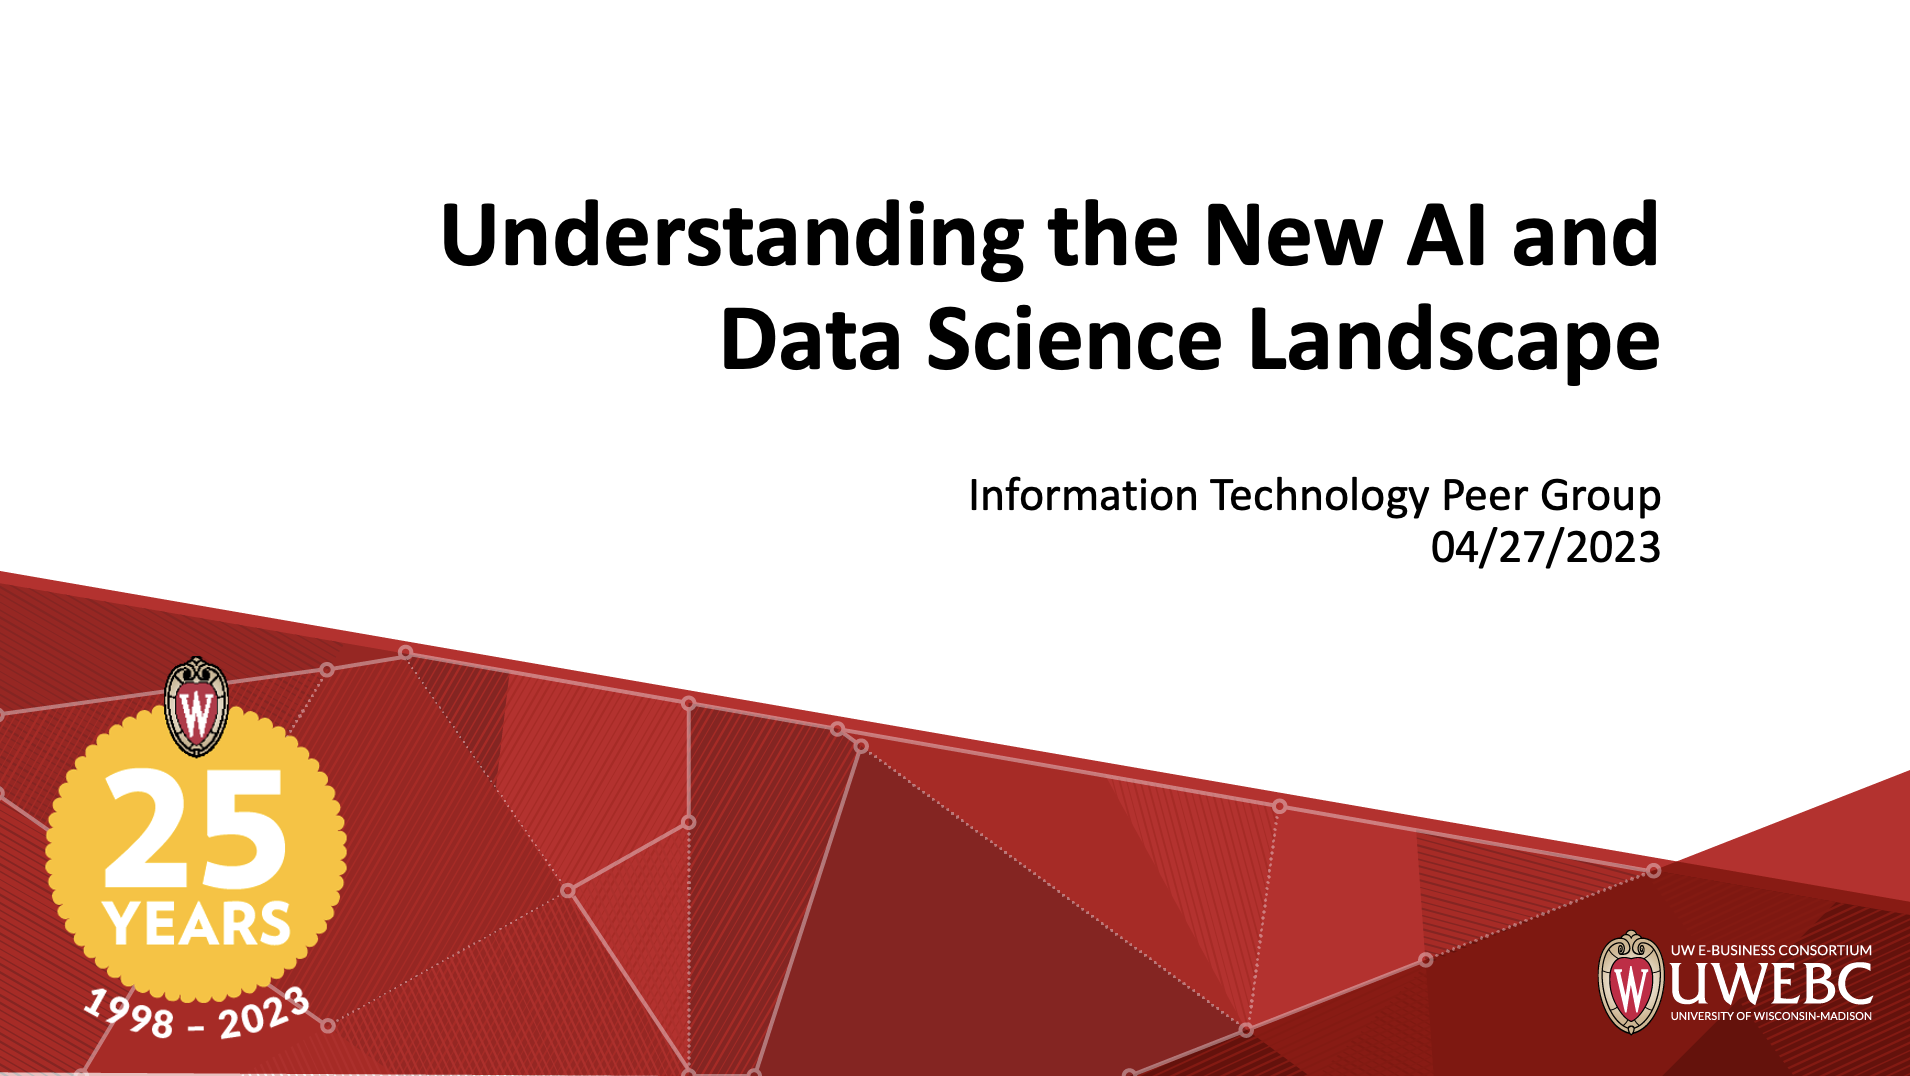 2. UWEBC Presentation Slides: Understanding the New AI and Data Science Landscape thumbnail